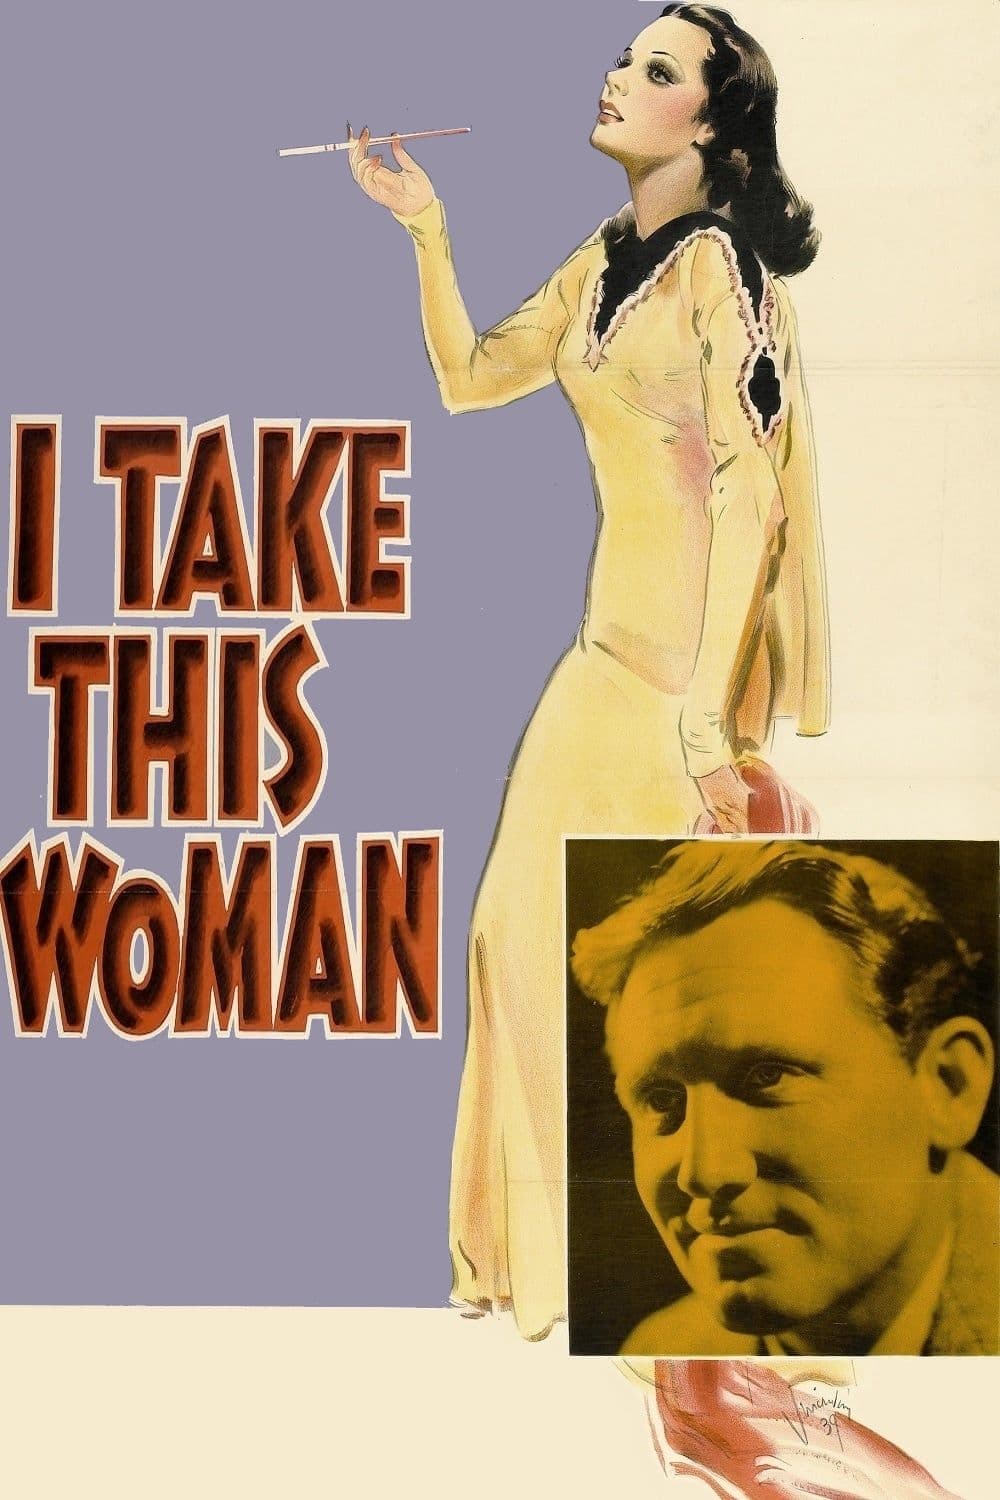 I Take This Woman (1940)